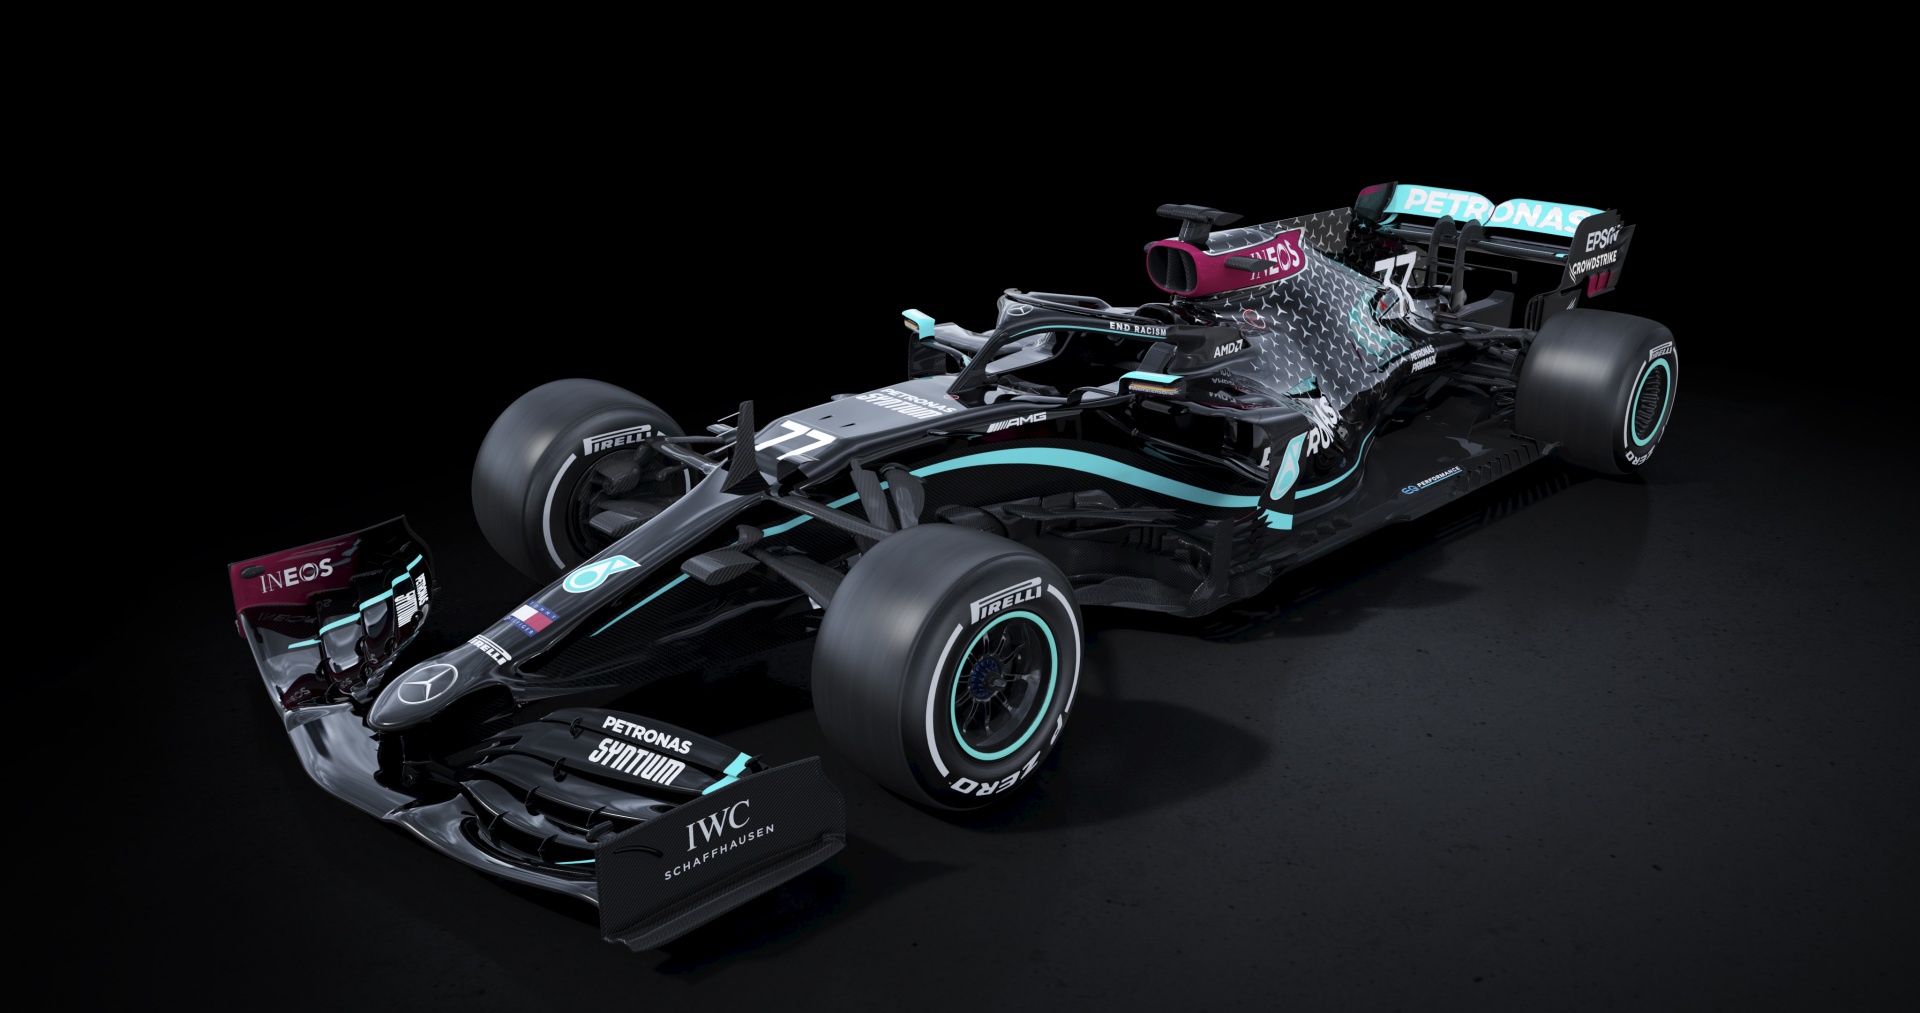 Mercedes F1 Valtteri Bottas Livery Pits To Podium Renewed Purpose